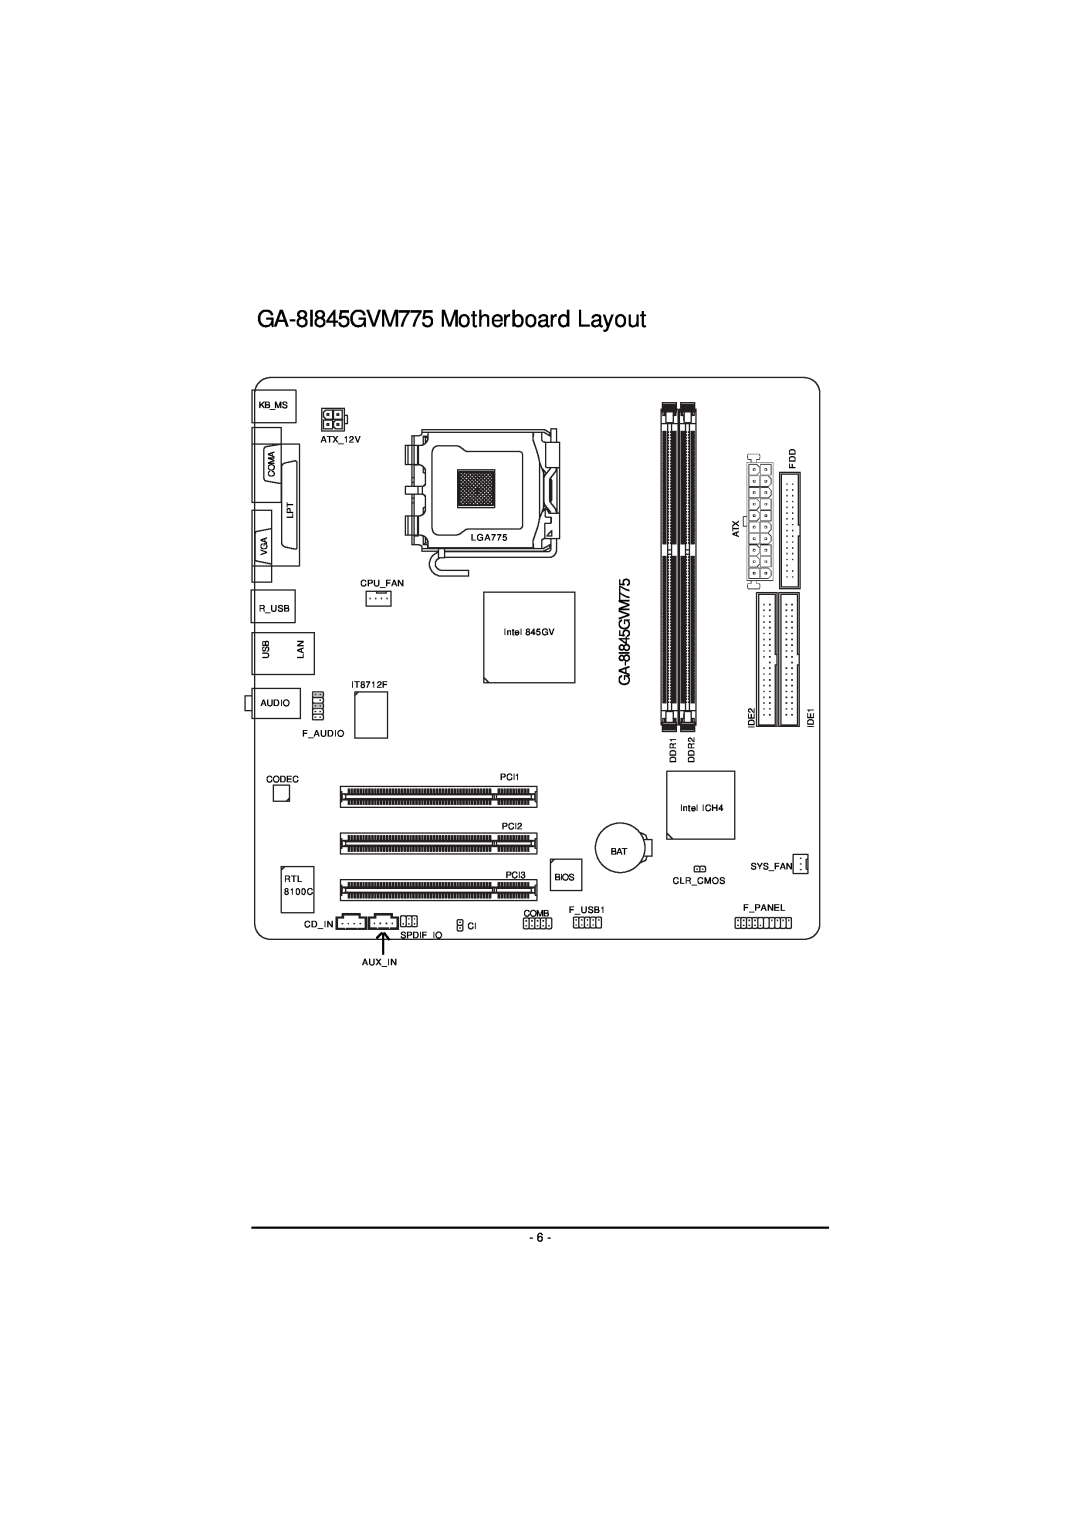 Gigabyte user manual GA-8I845GVM775 Motherboard Layout 